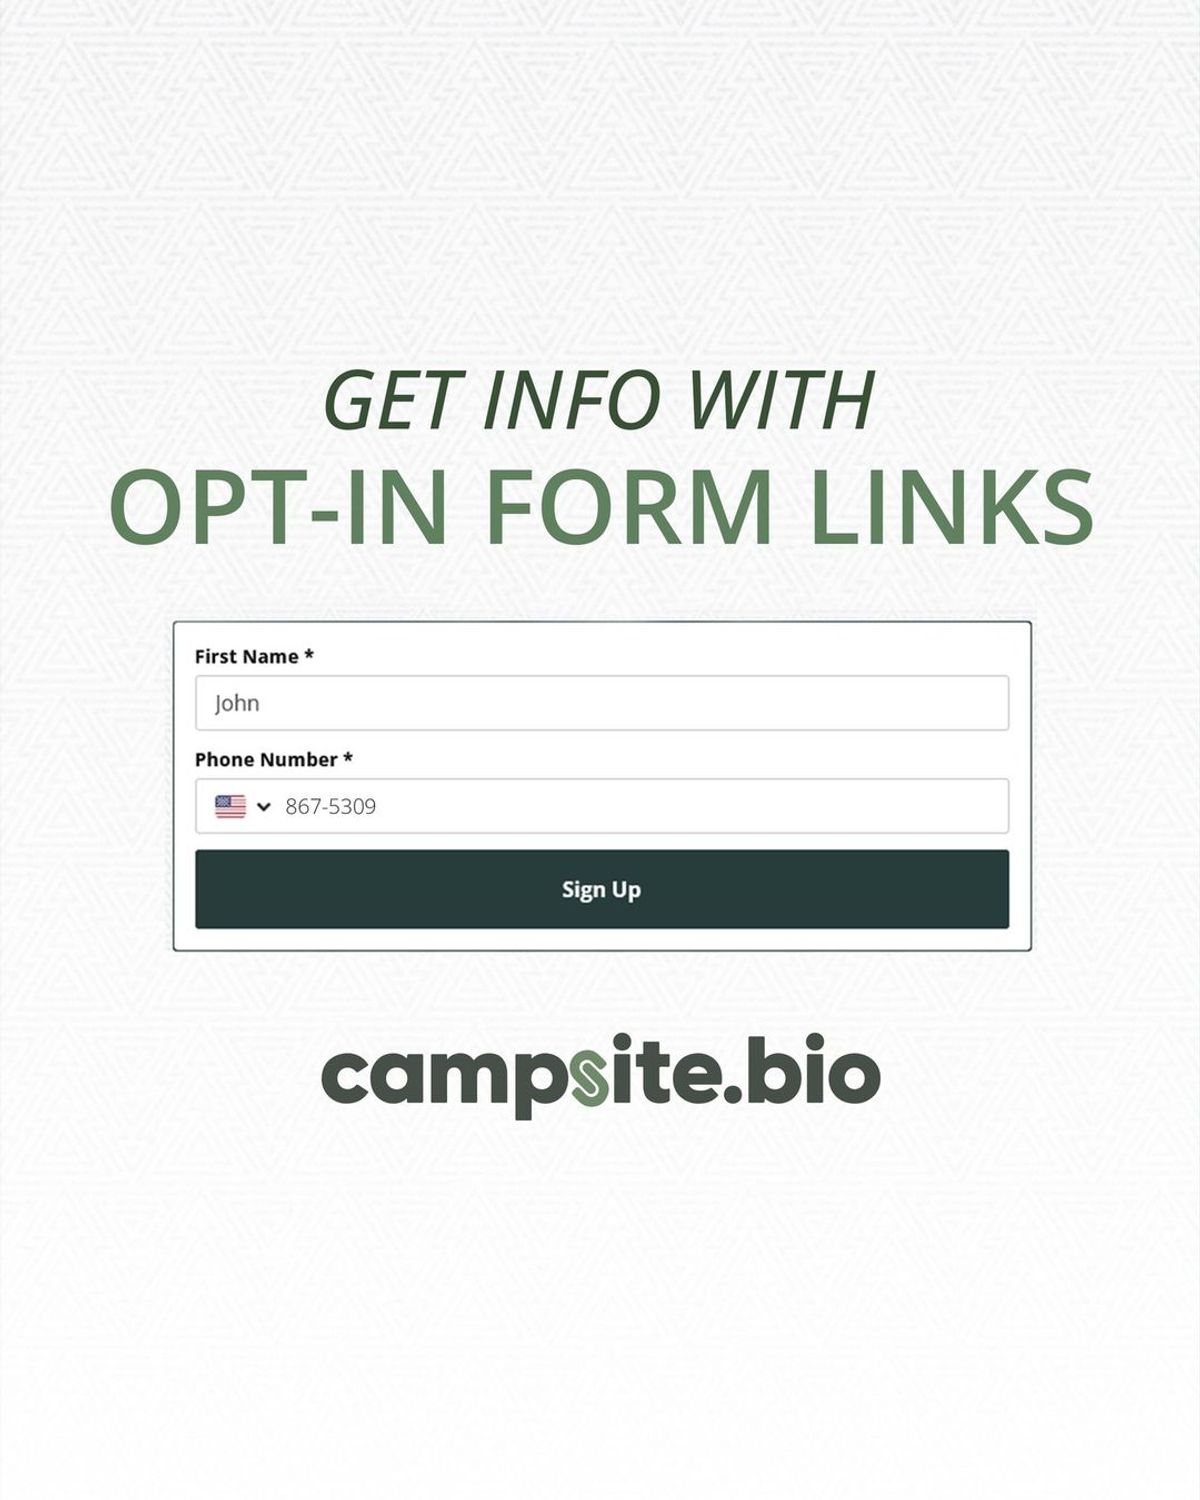 Campsite.bio Opt-In Forms